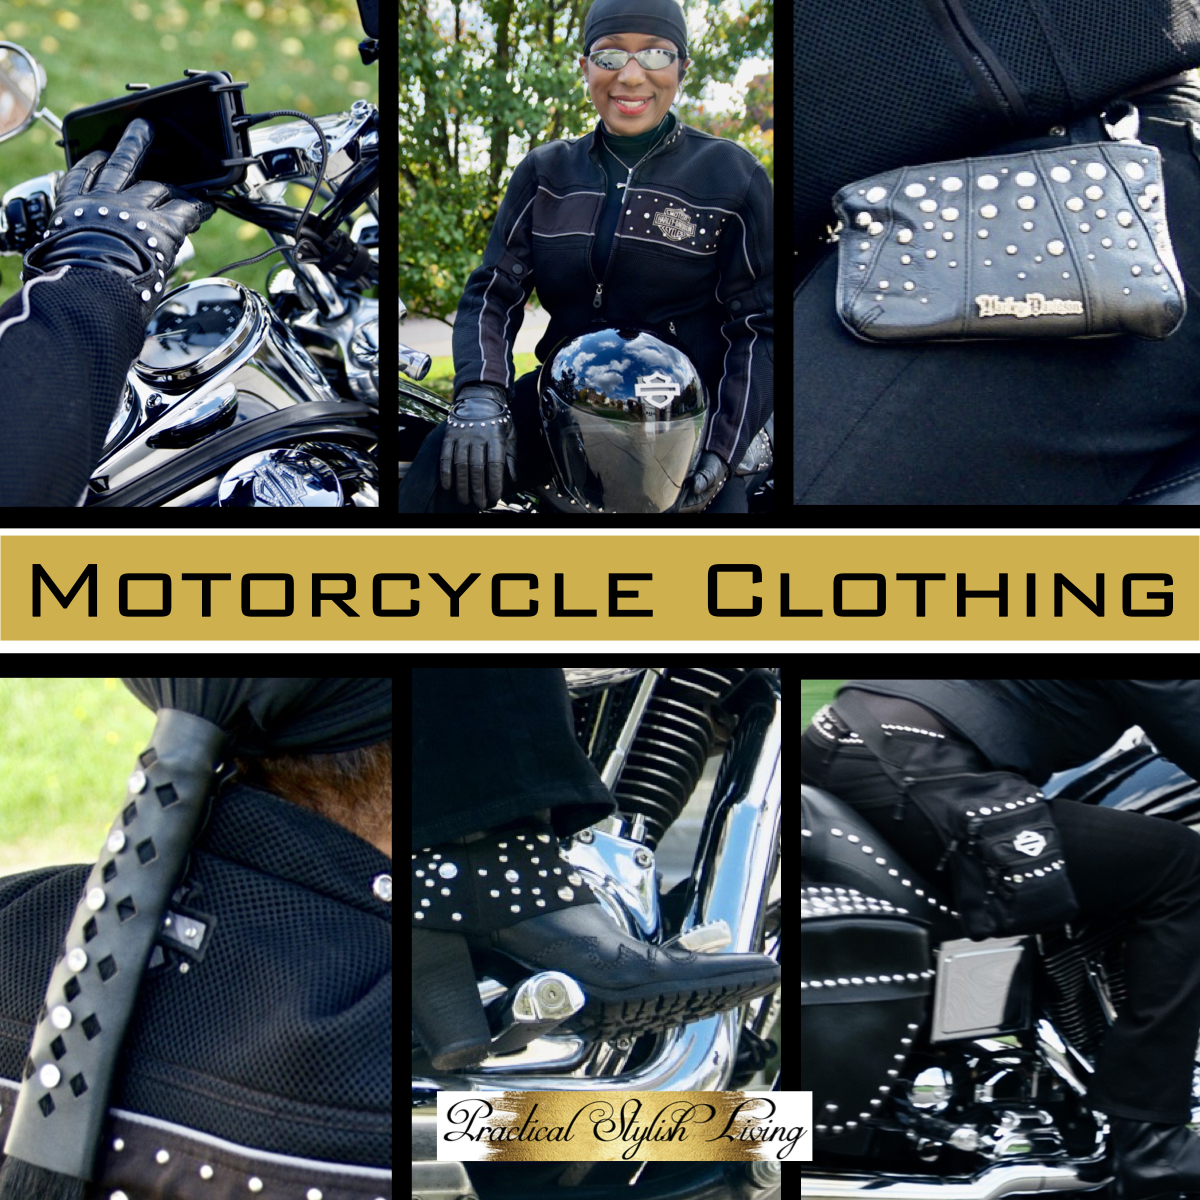 Motorcycle Clothing | Practical Stylish Living | Motorcycle Lifestyle